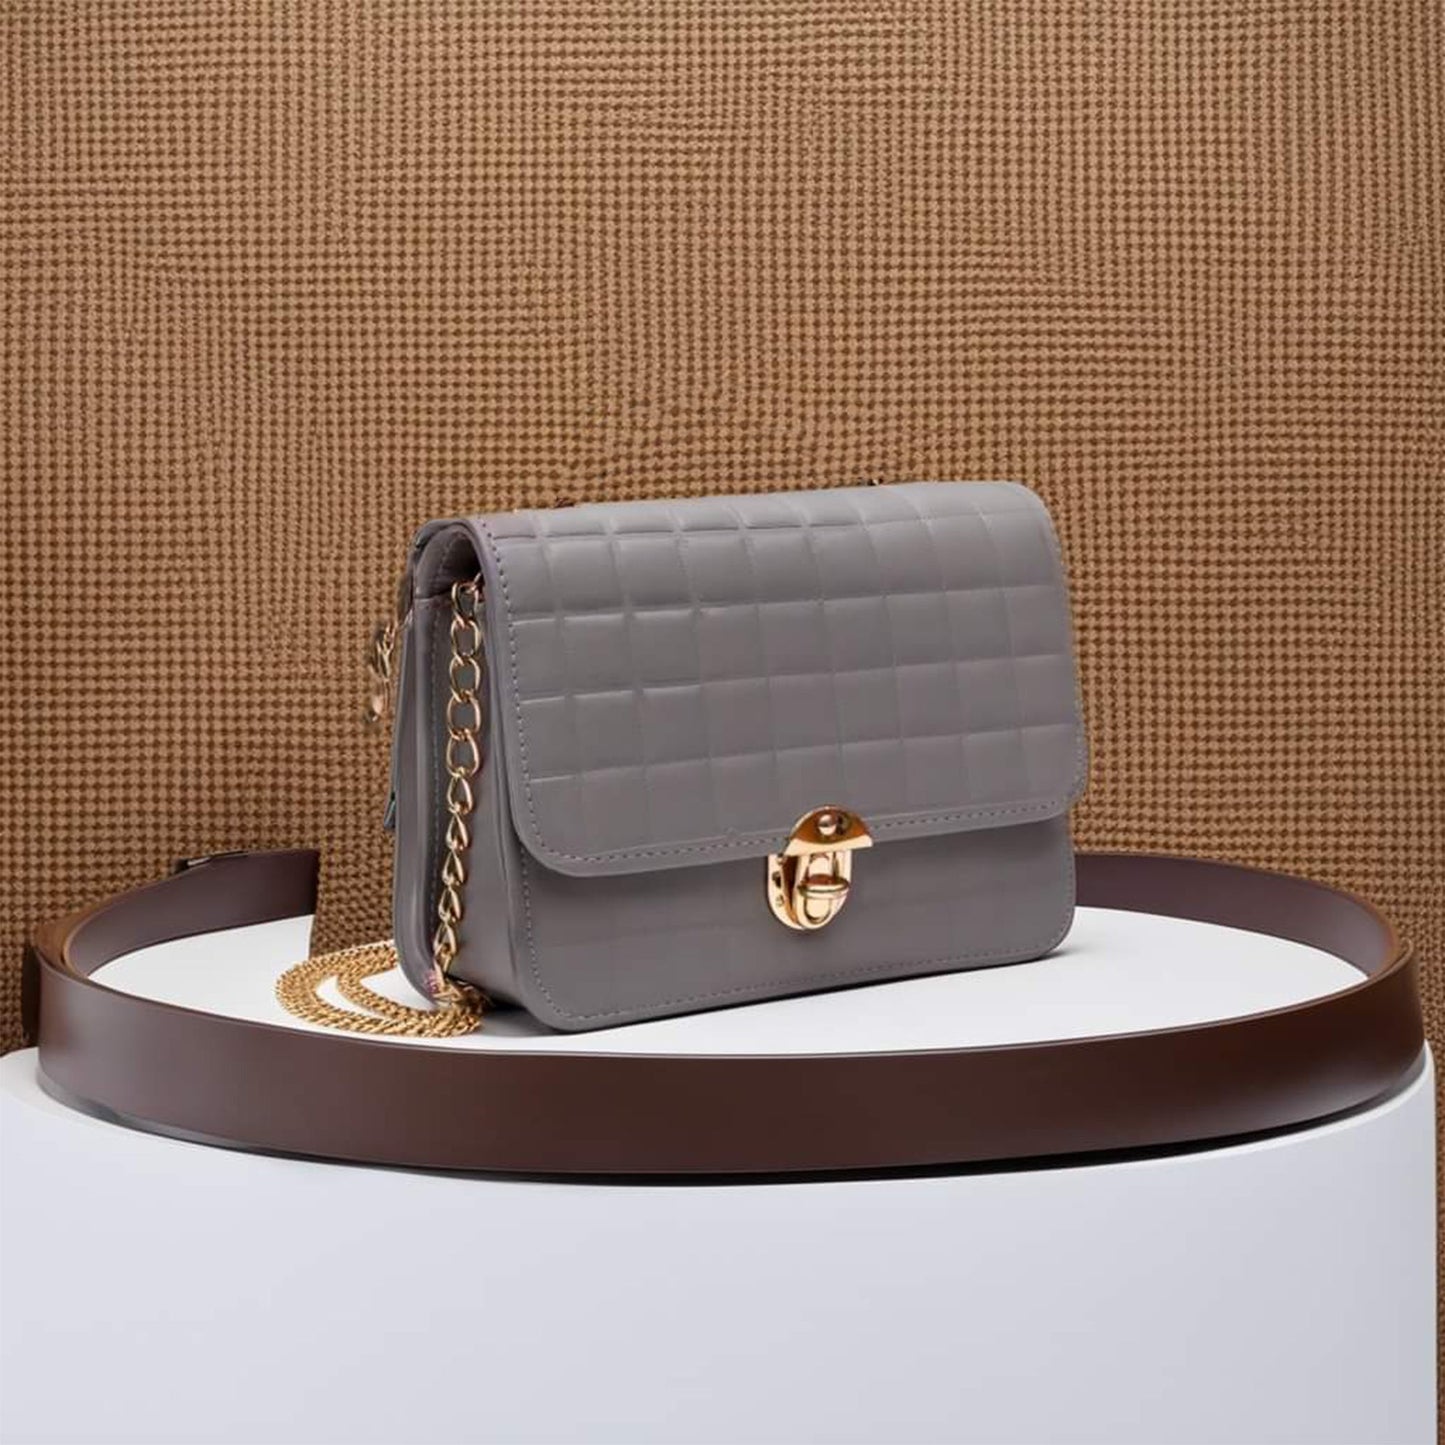 Luxury crossbody bag for womens